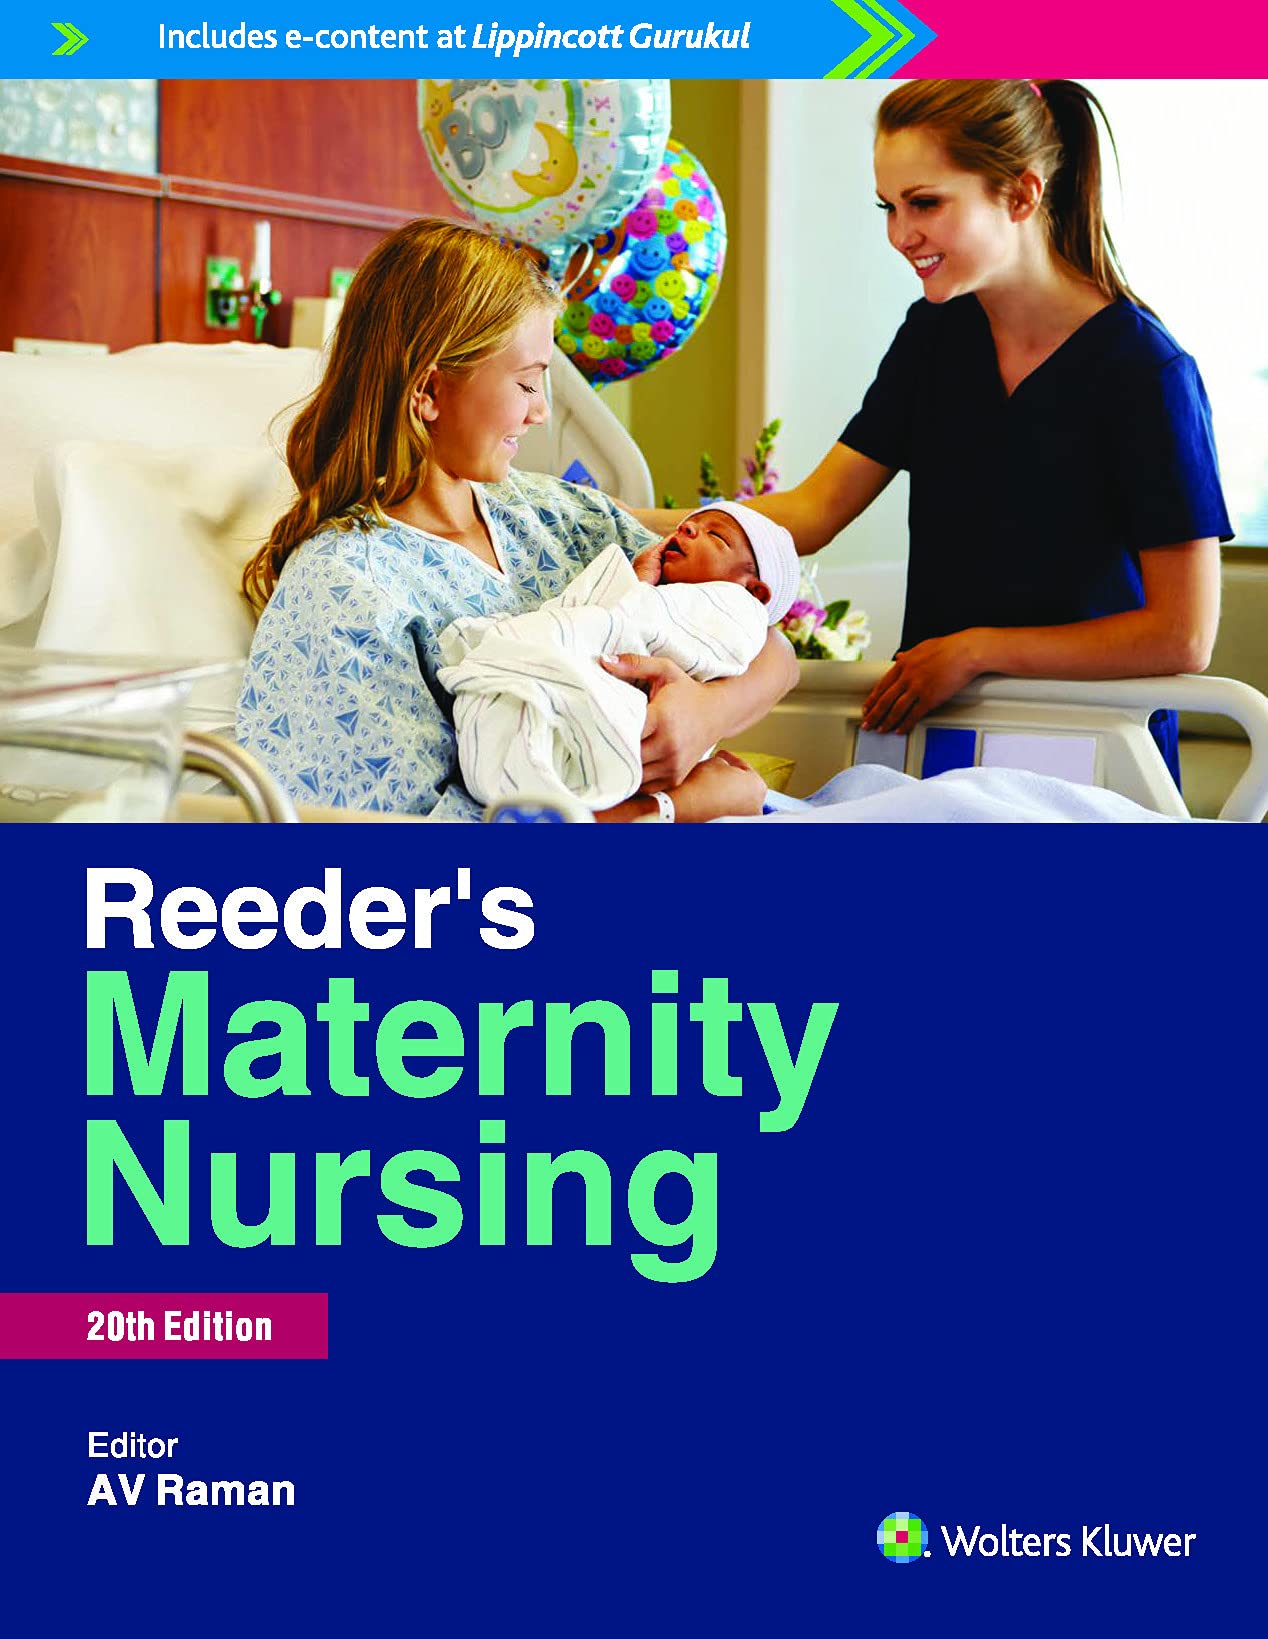 Reeders Maternity Nursing by A.V Raman